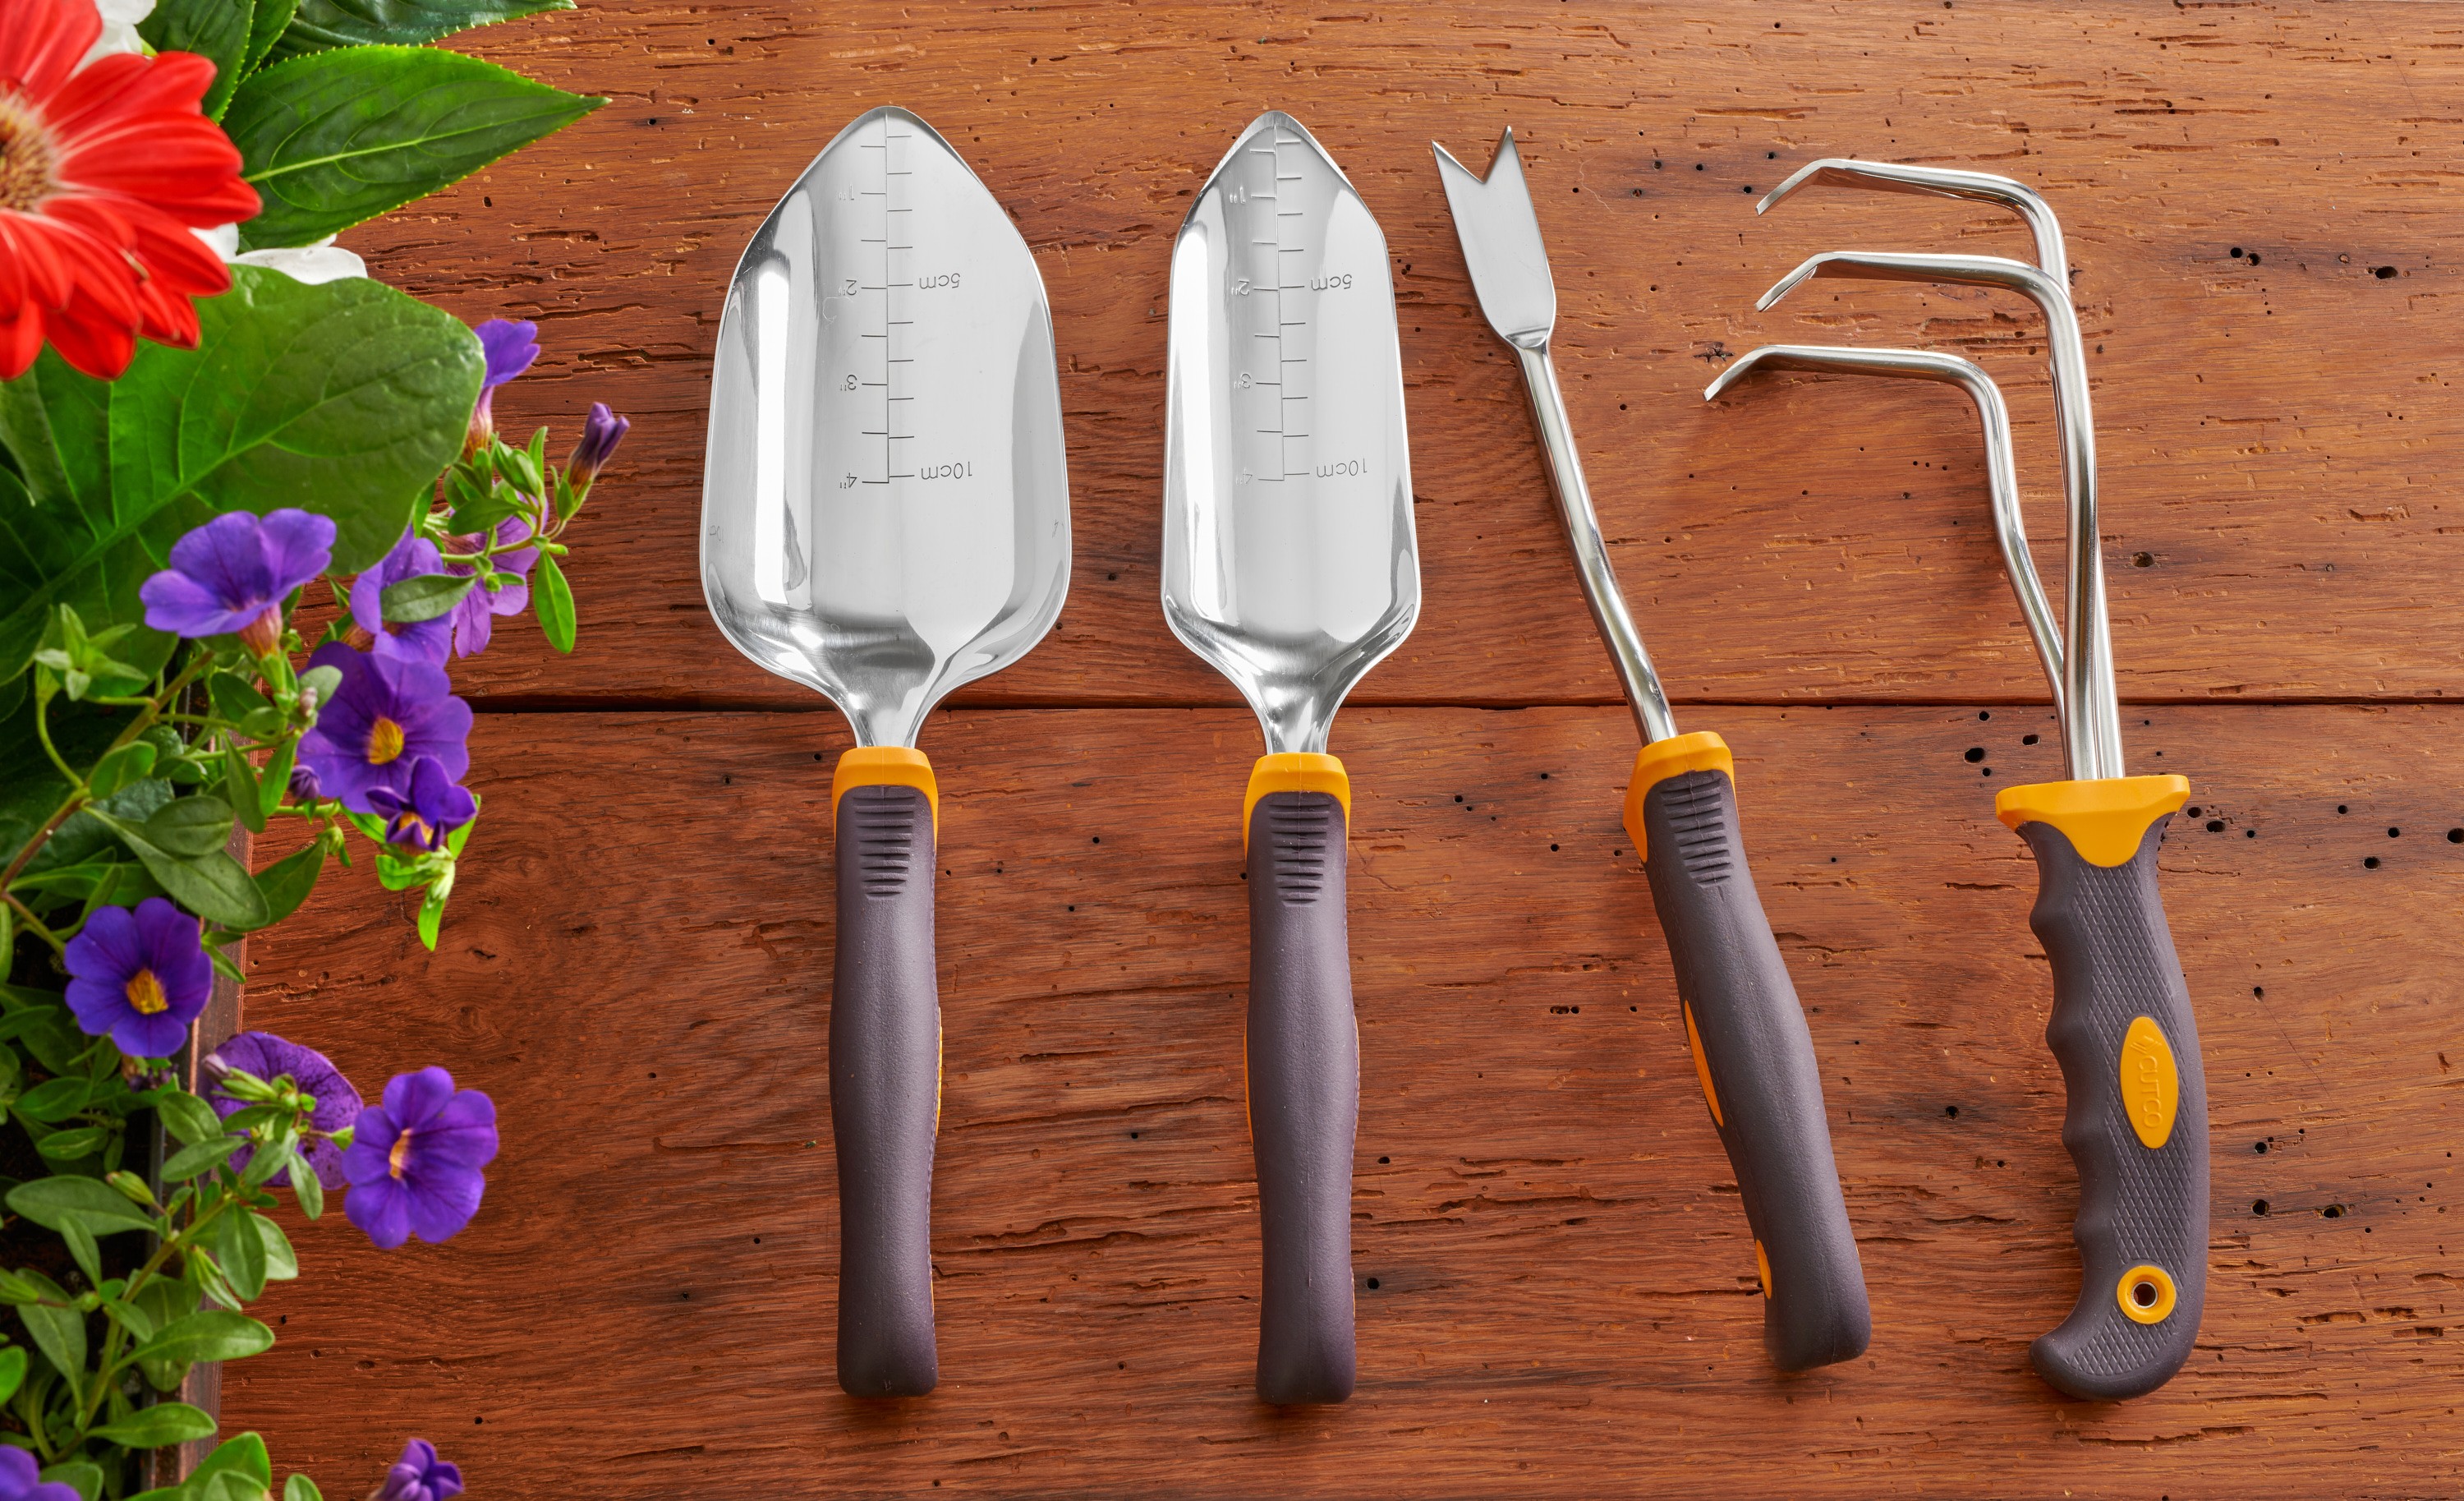 4-Pc. Garden Tool Set with Transplanting Trowel | Garden Tools by Cutco